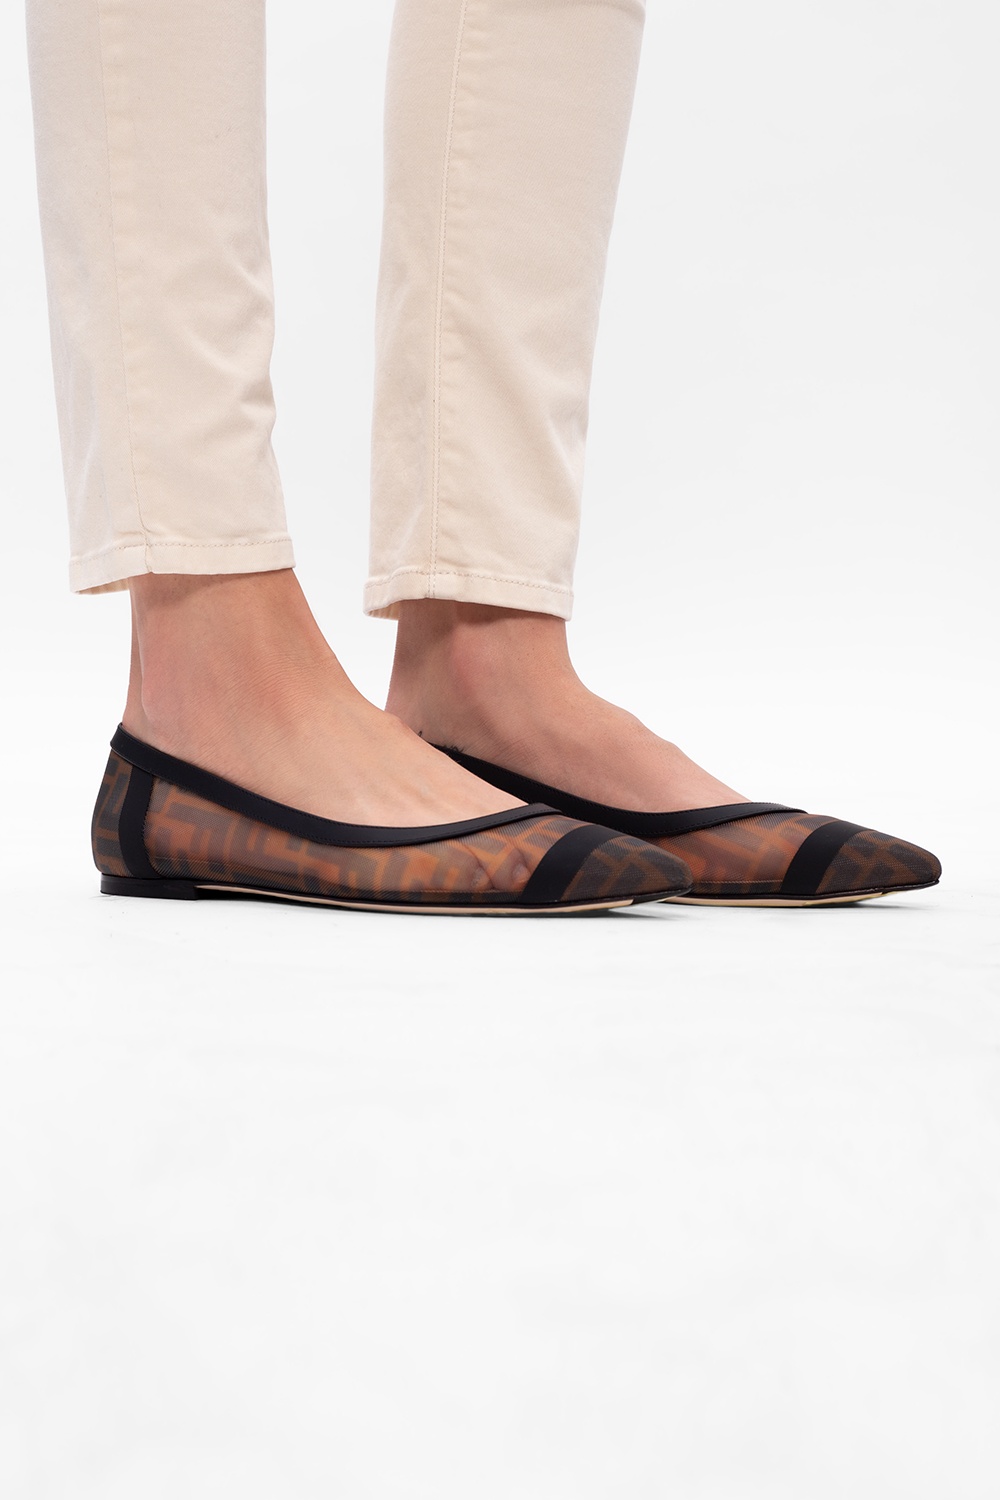 Brown Transparent socks Fendi - Vitkac GB